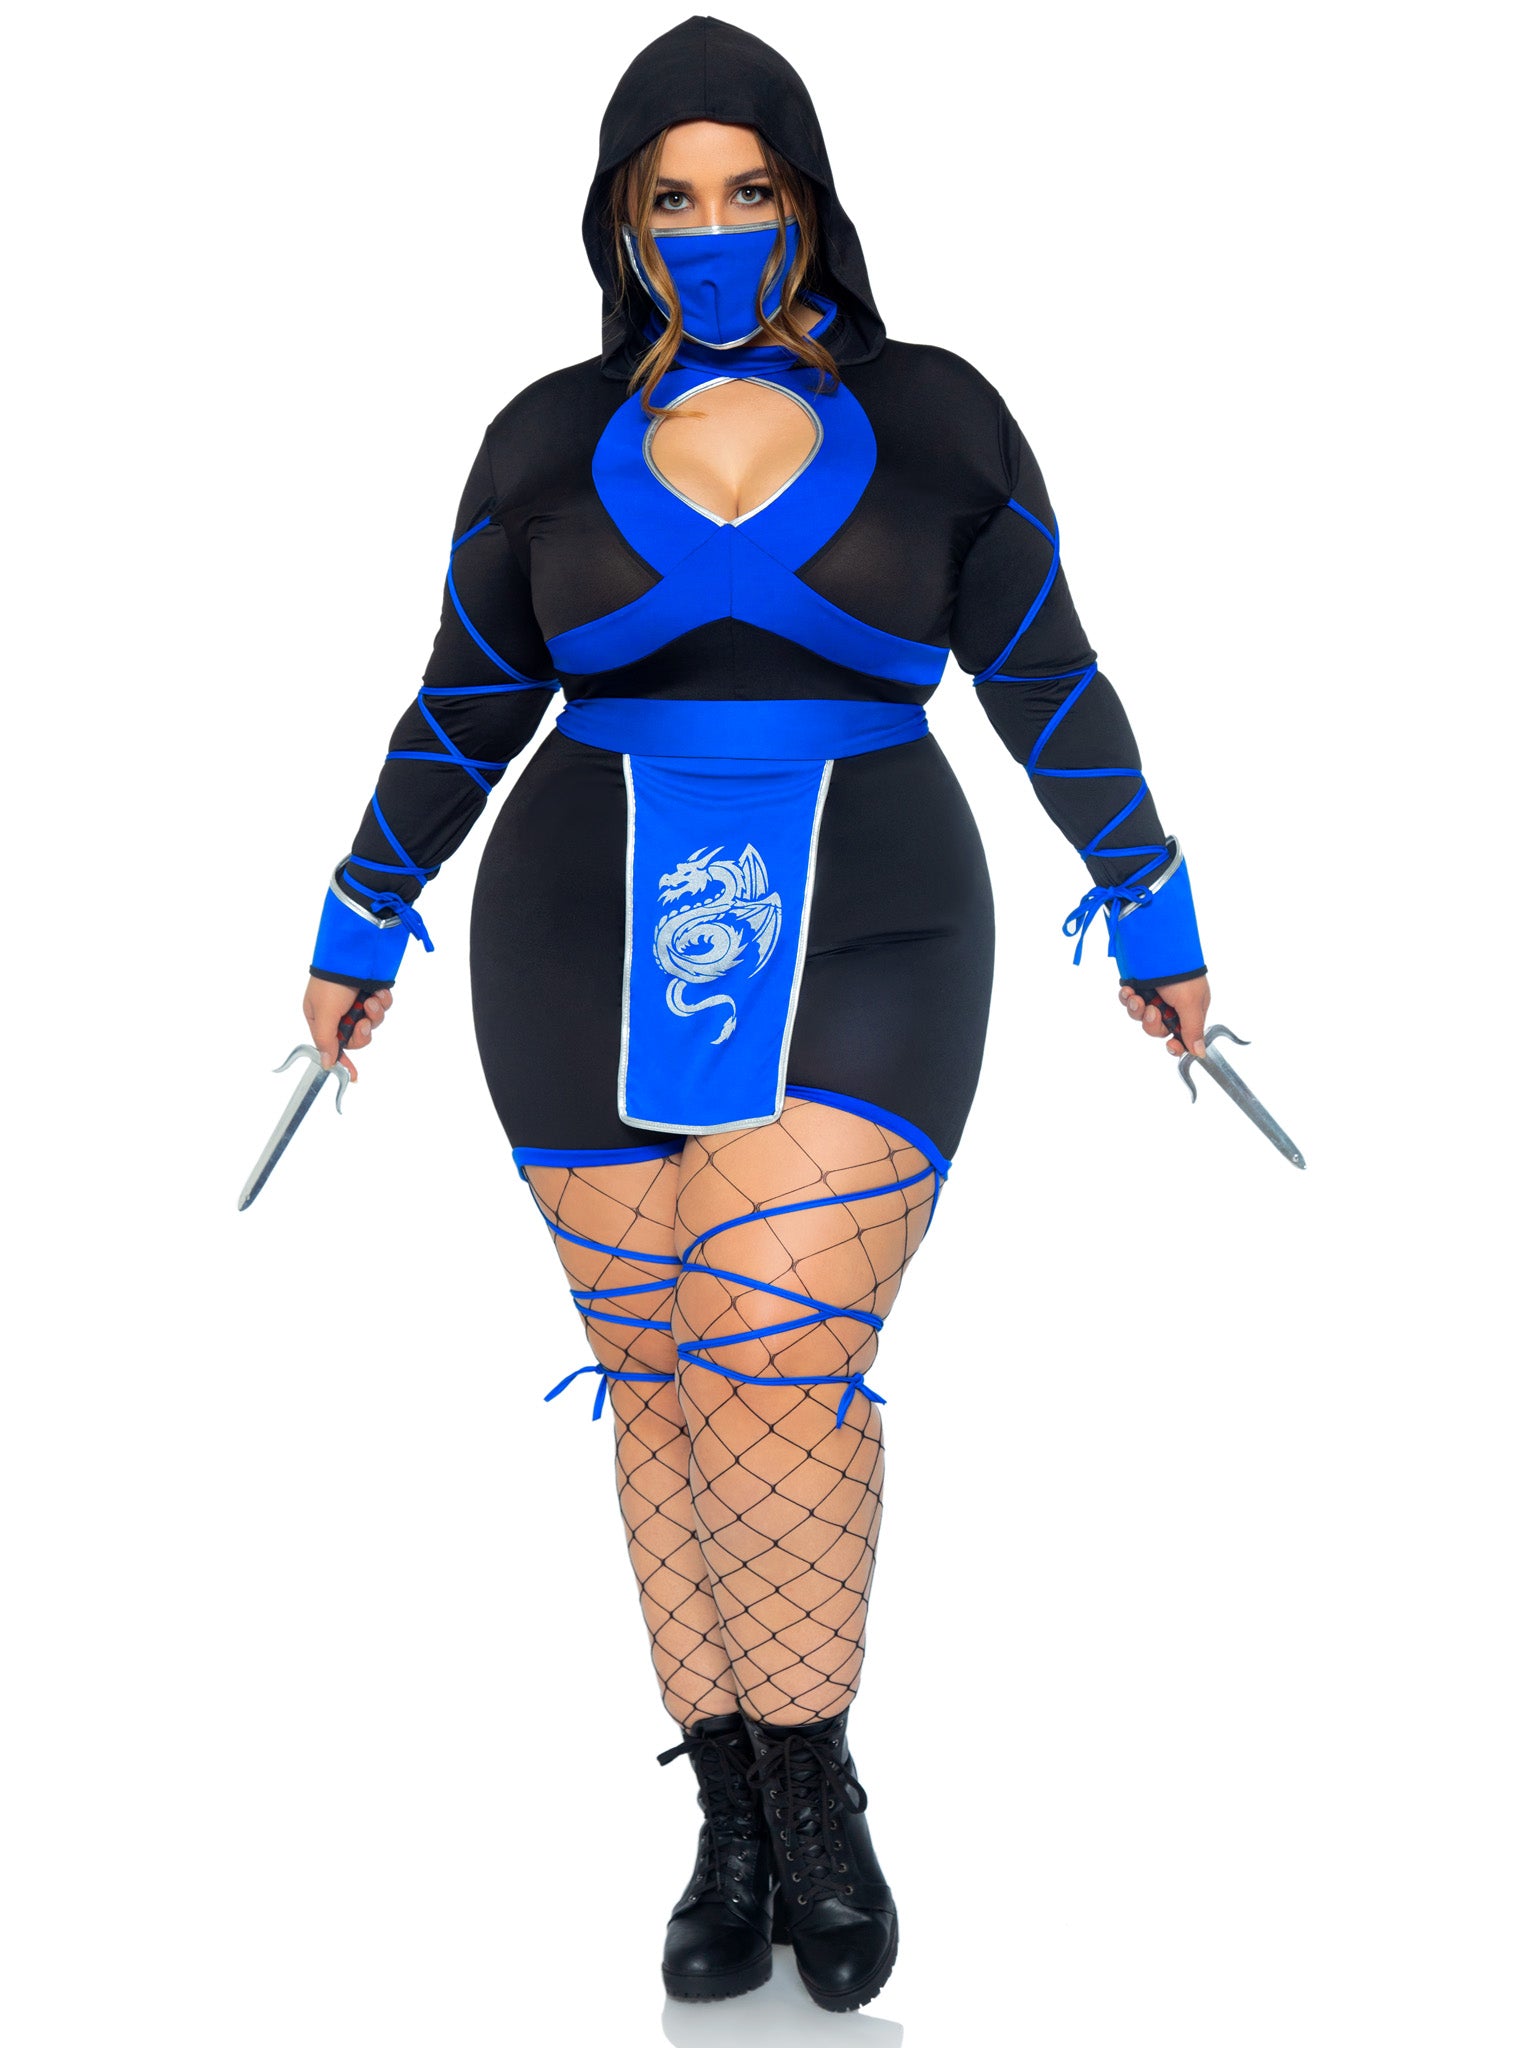 Ninja costume women • Compare & find best price now »